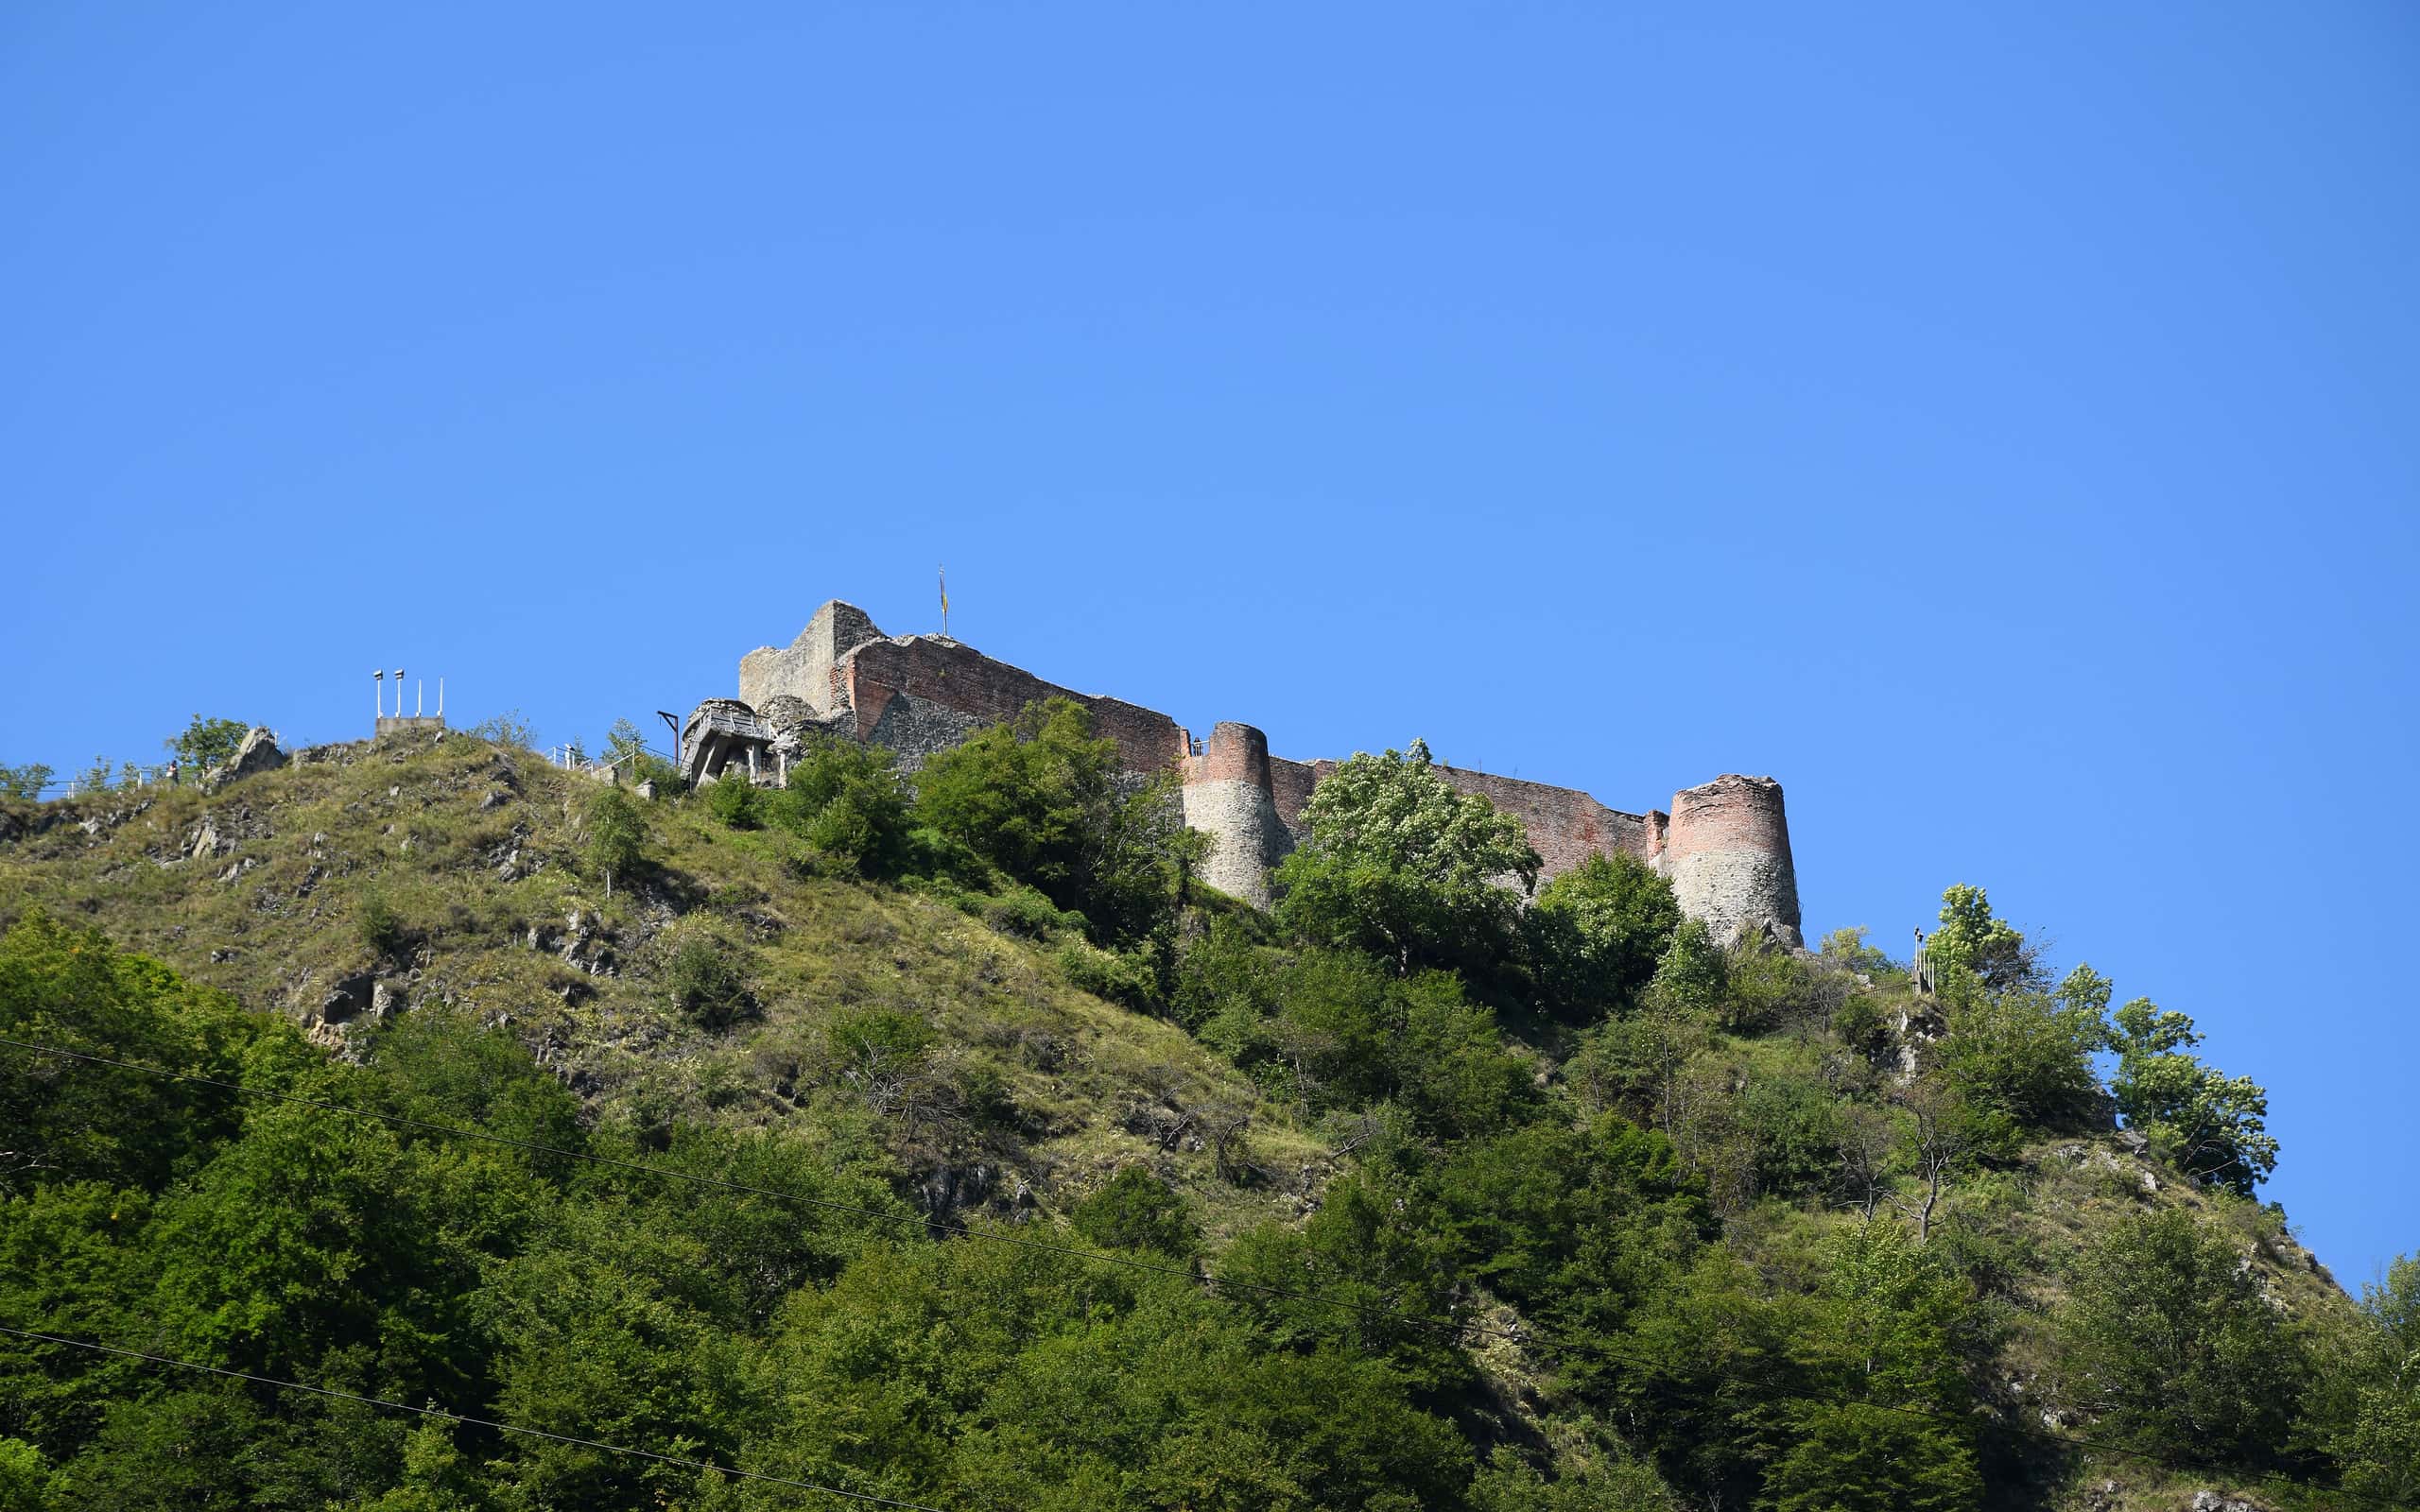 Ruins of Poenari Castle on Mount Cetatea. Real Dracula castle, Romania.